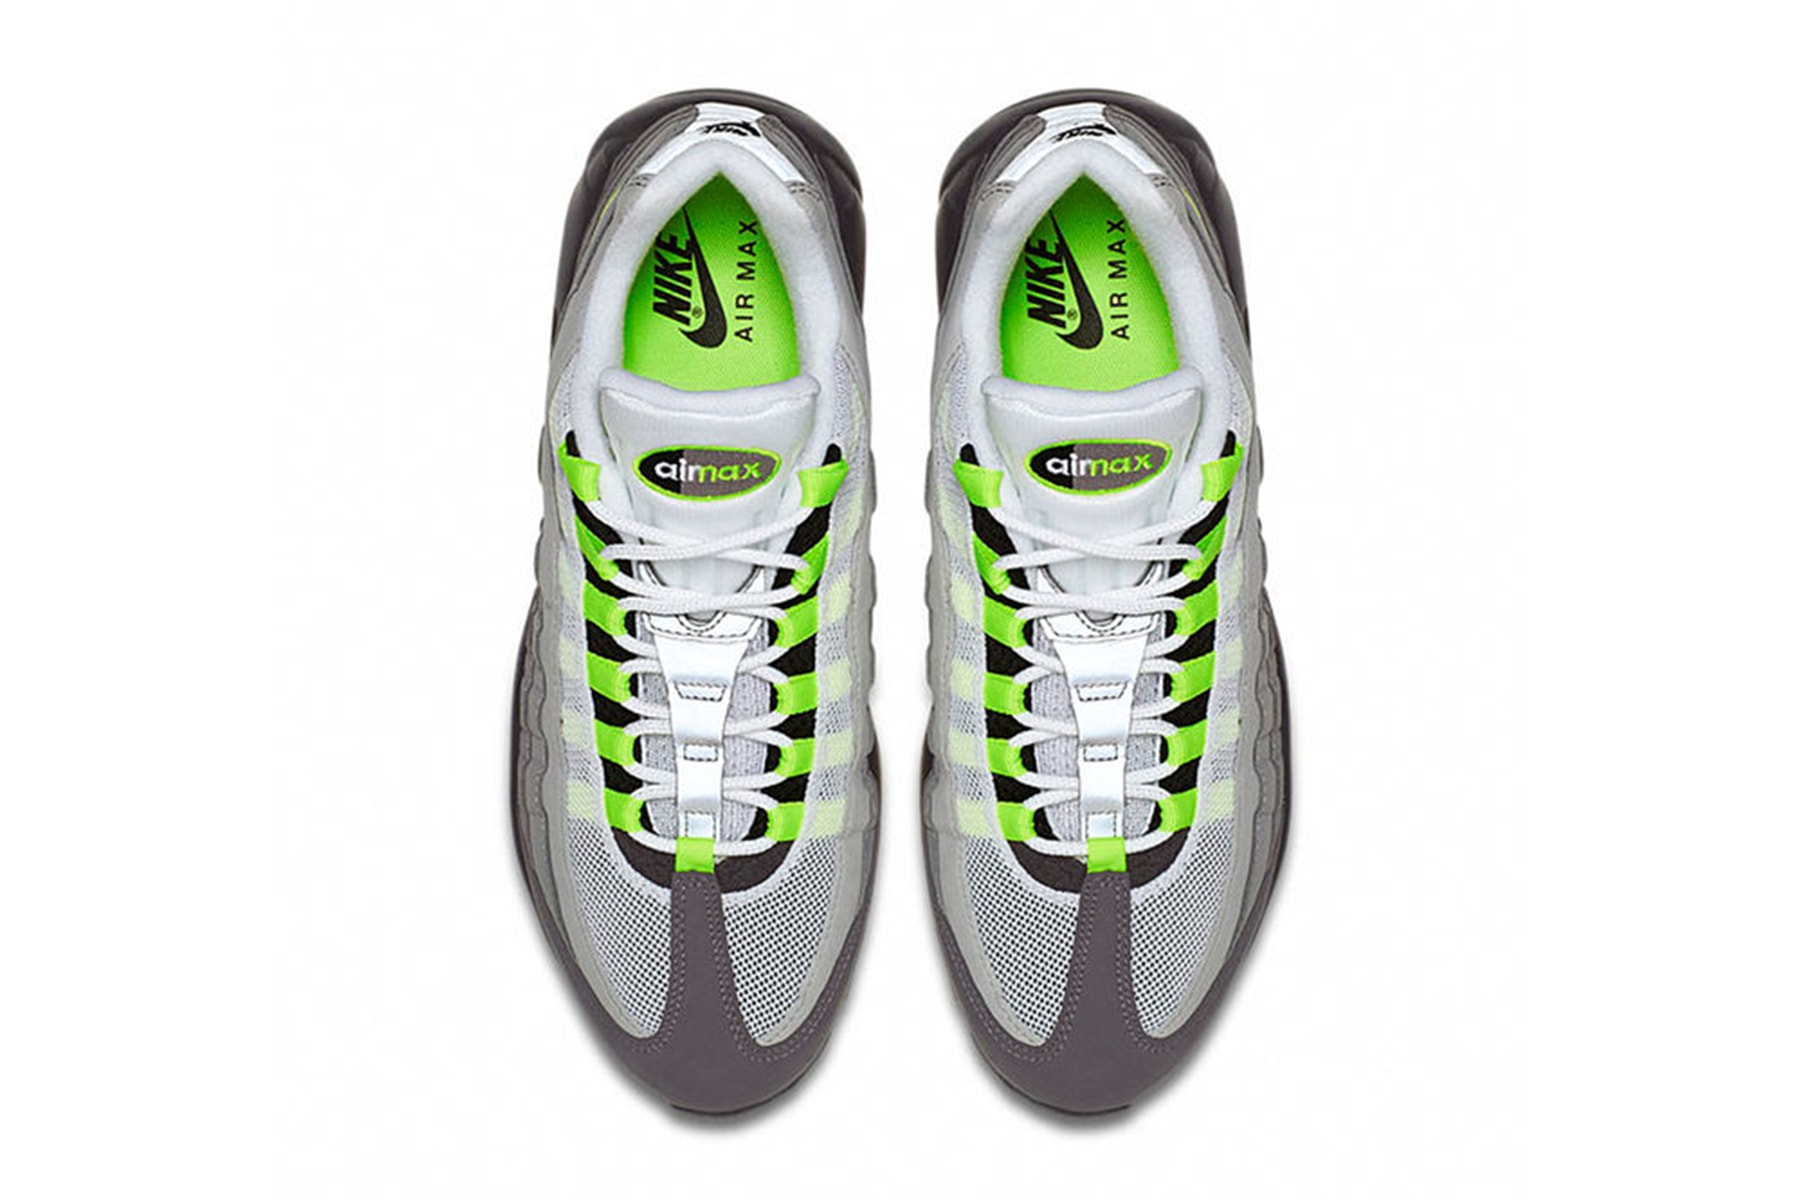 Nike Air Max 95 OG “Neon” が ABC-MART GRAND STAGE 銀座店にて再販決定 今年2月に買い逃した日本のスニーカーヘッズに『ABC-MART』よりサプライズプレゼント 